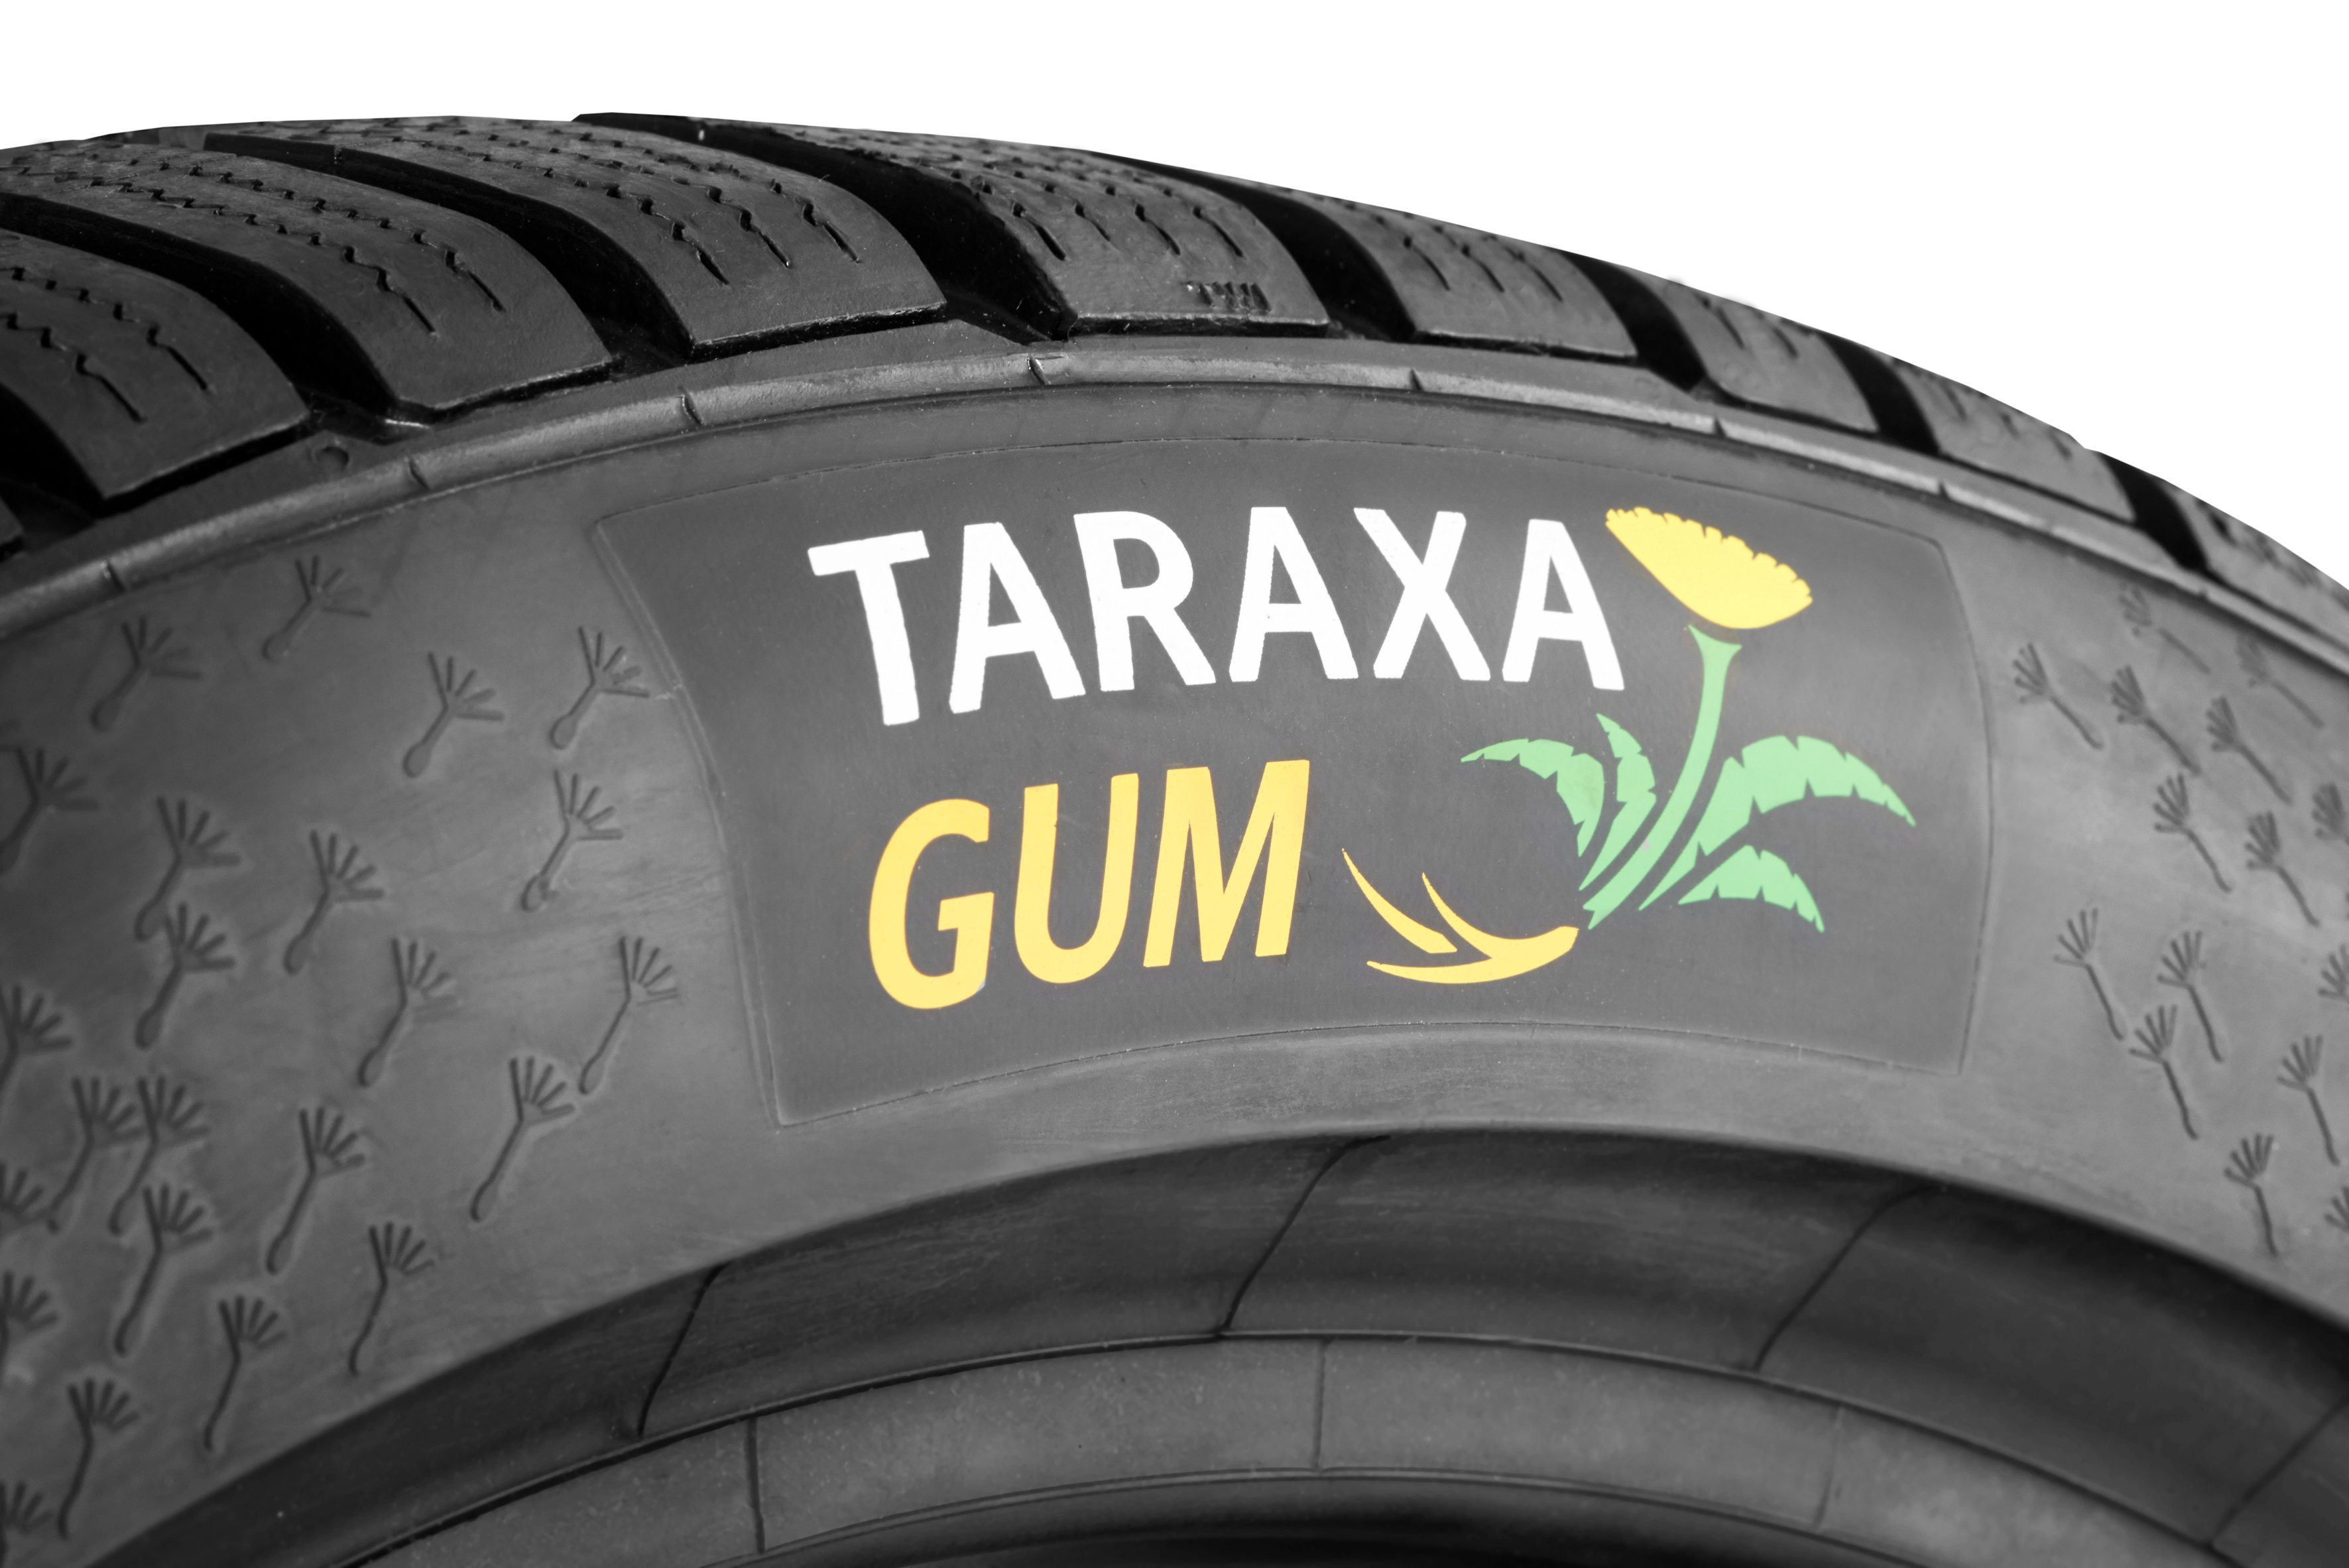 Continental producing first Taraxagum-based test tyres